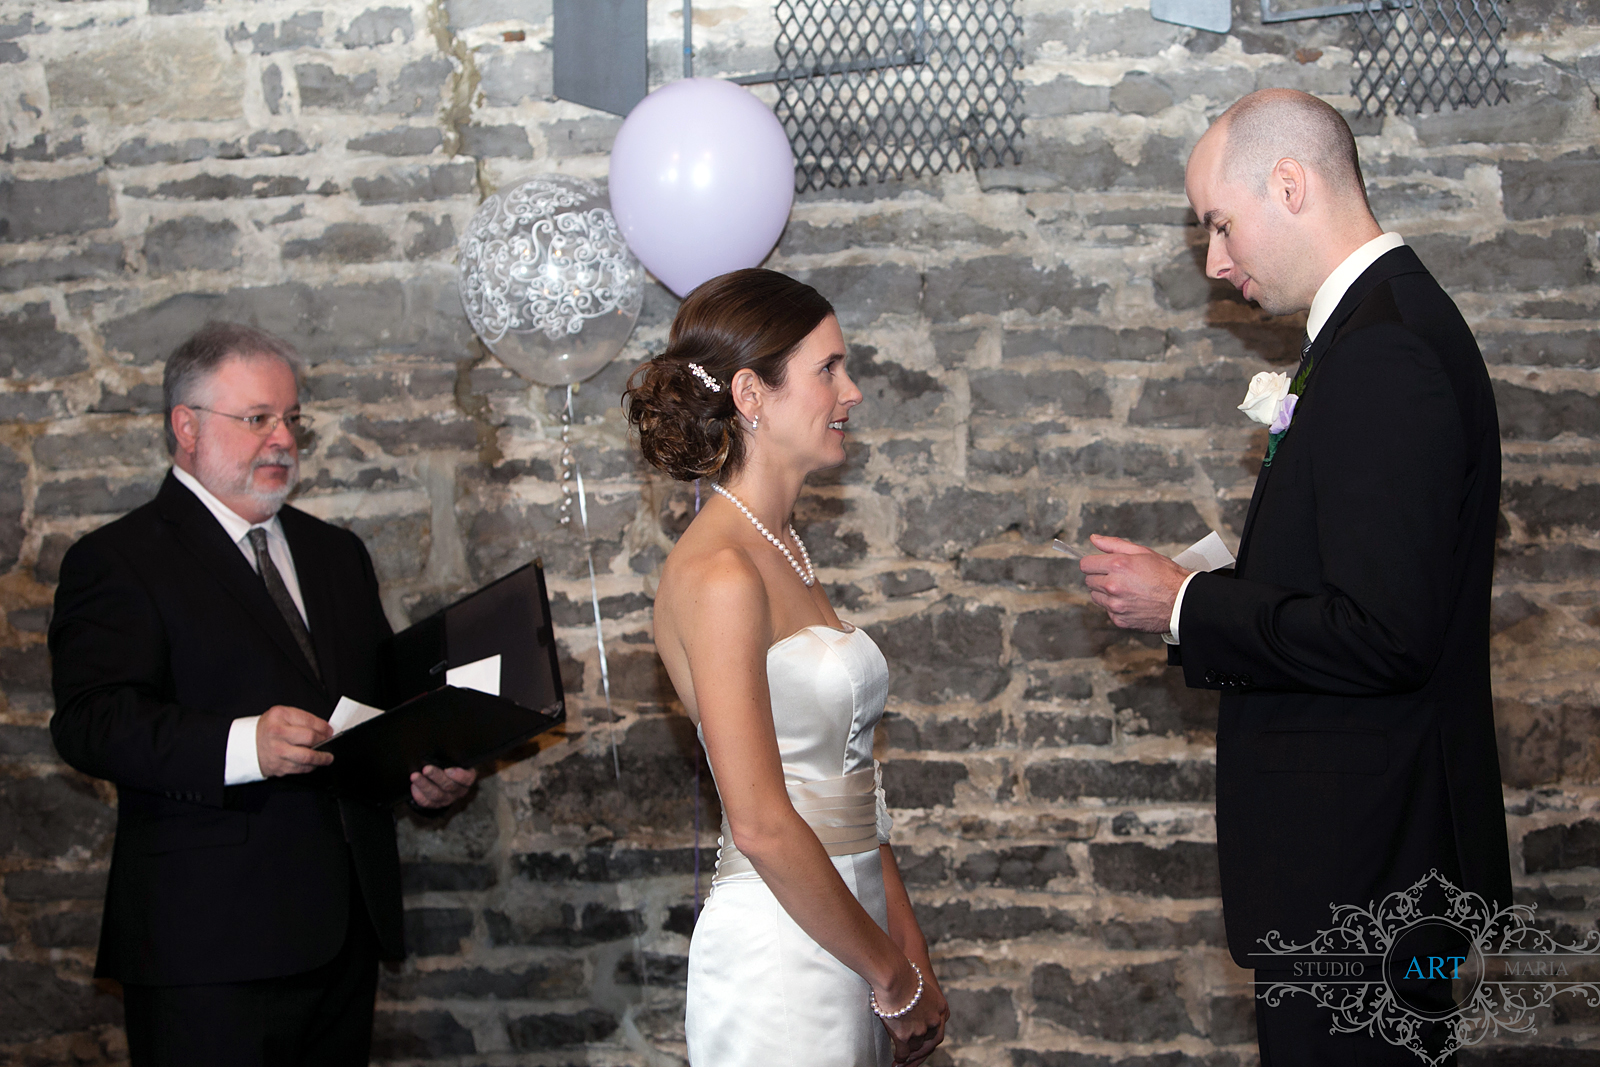 https://www.ottawaweddingmagazine.com/wp-content/uploads/2013/11/wedding-pictures-405.jpg